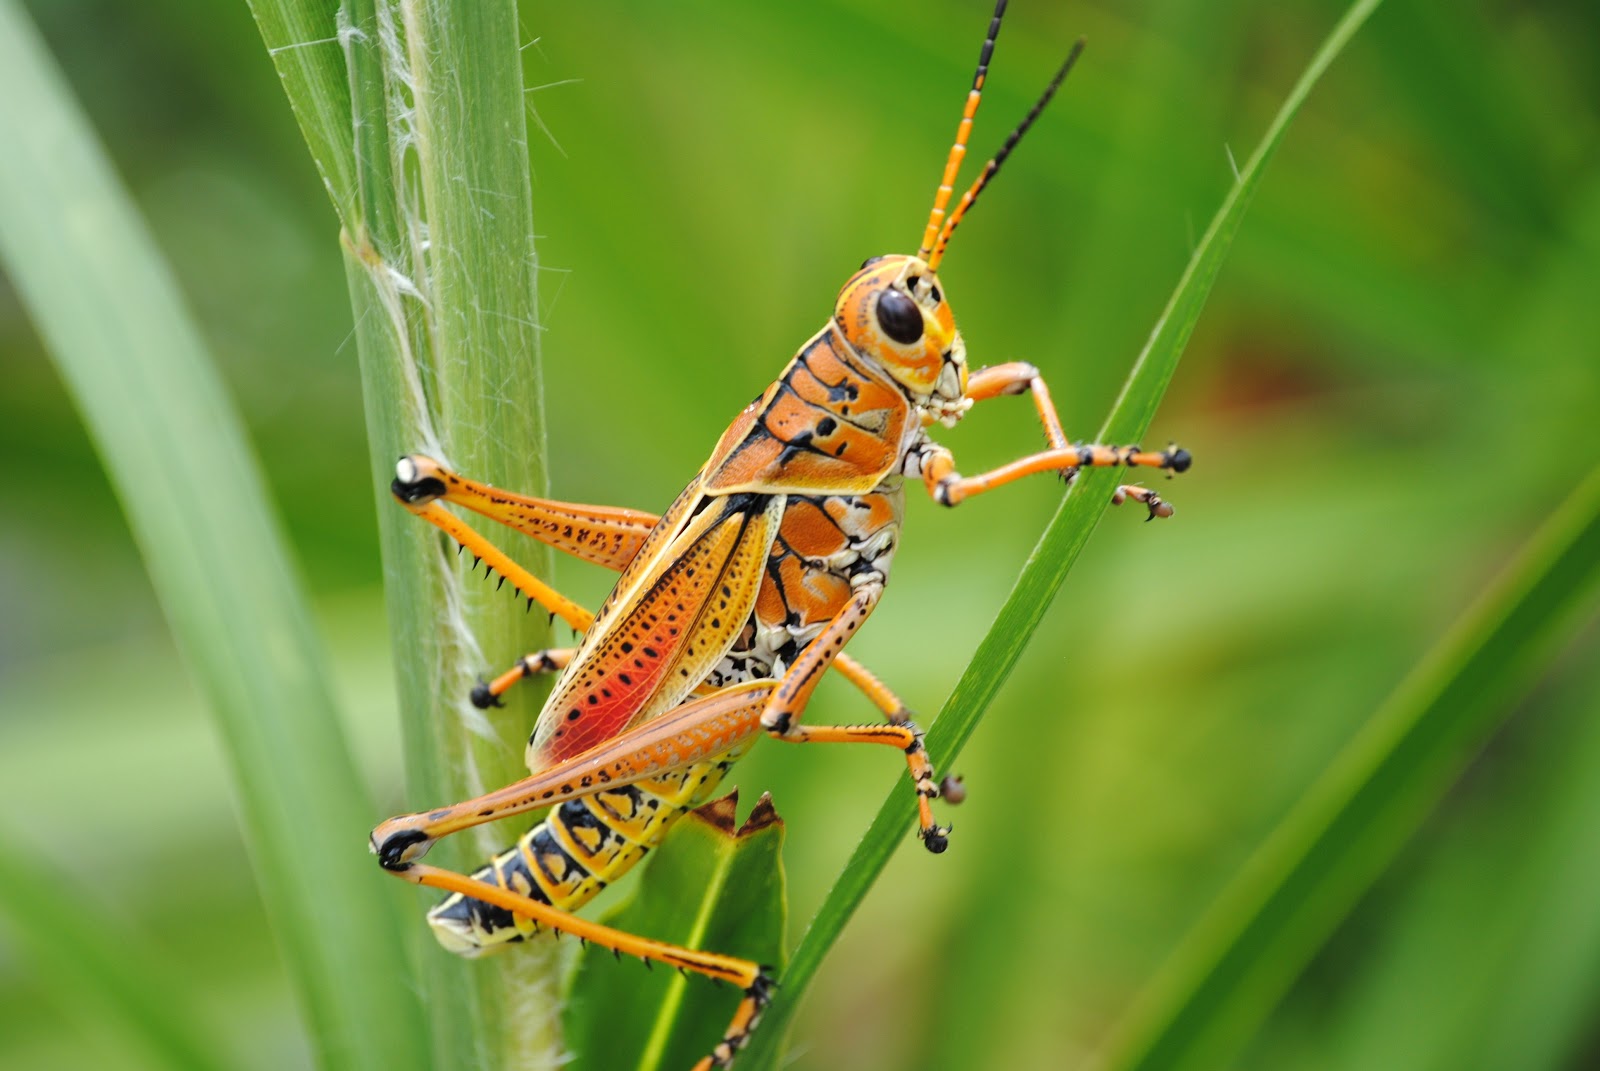 Grasshopper Wallpaper Pictures Umad